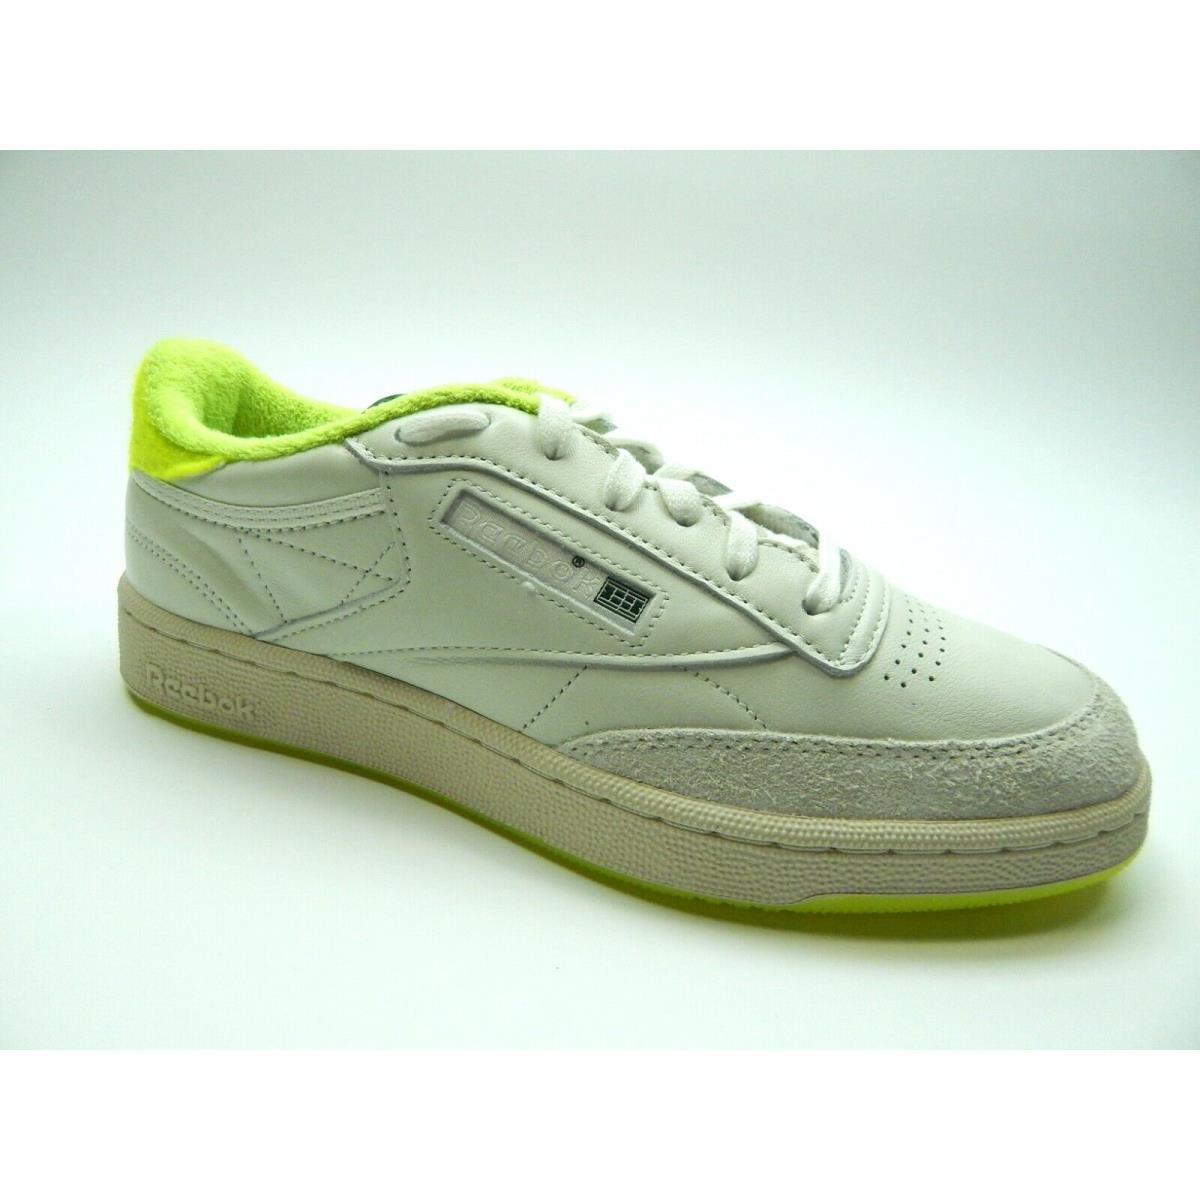 Reebok Club C-fp Chalk White FZ3064 Men Shoes Size 9.5 Limited Edition 500